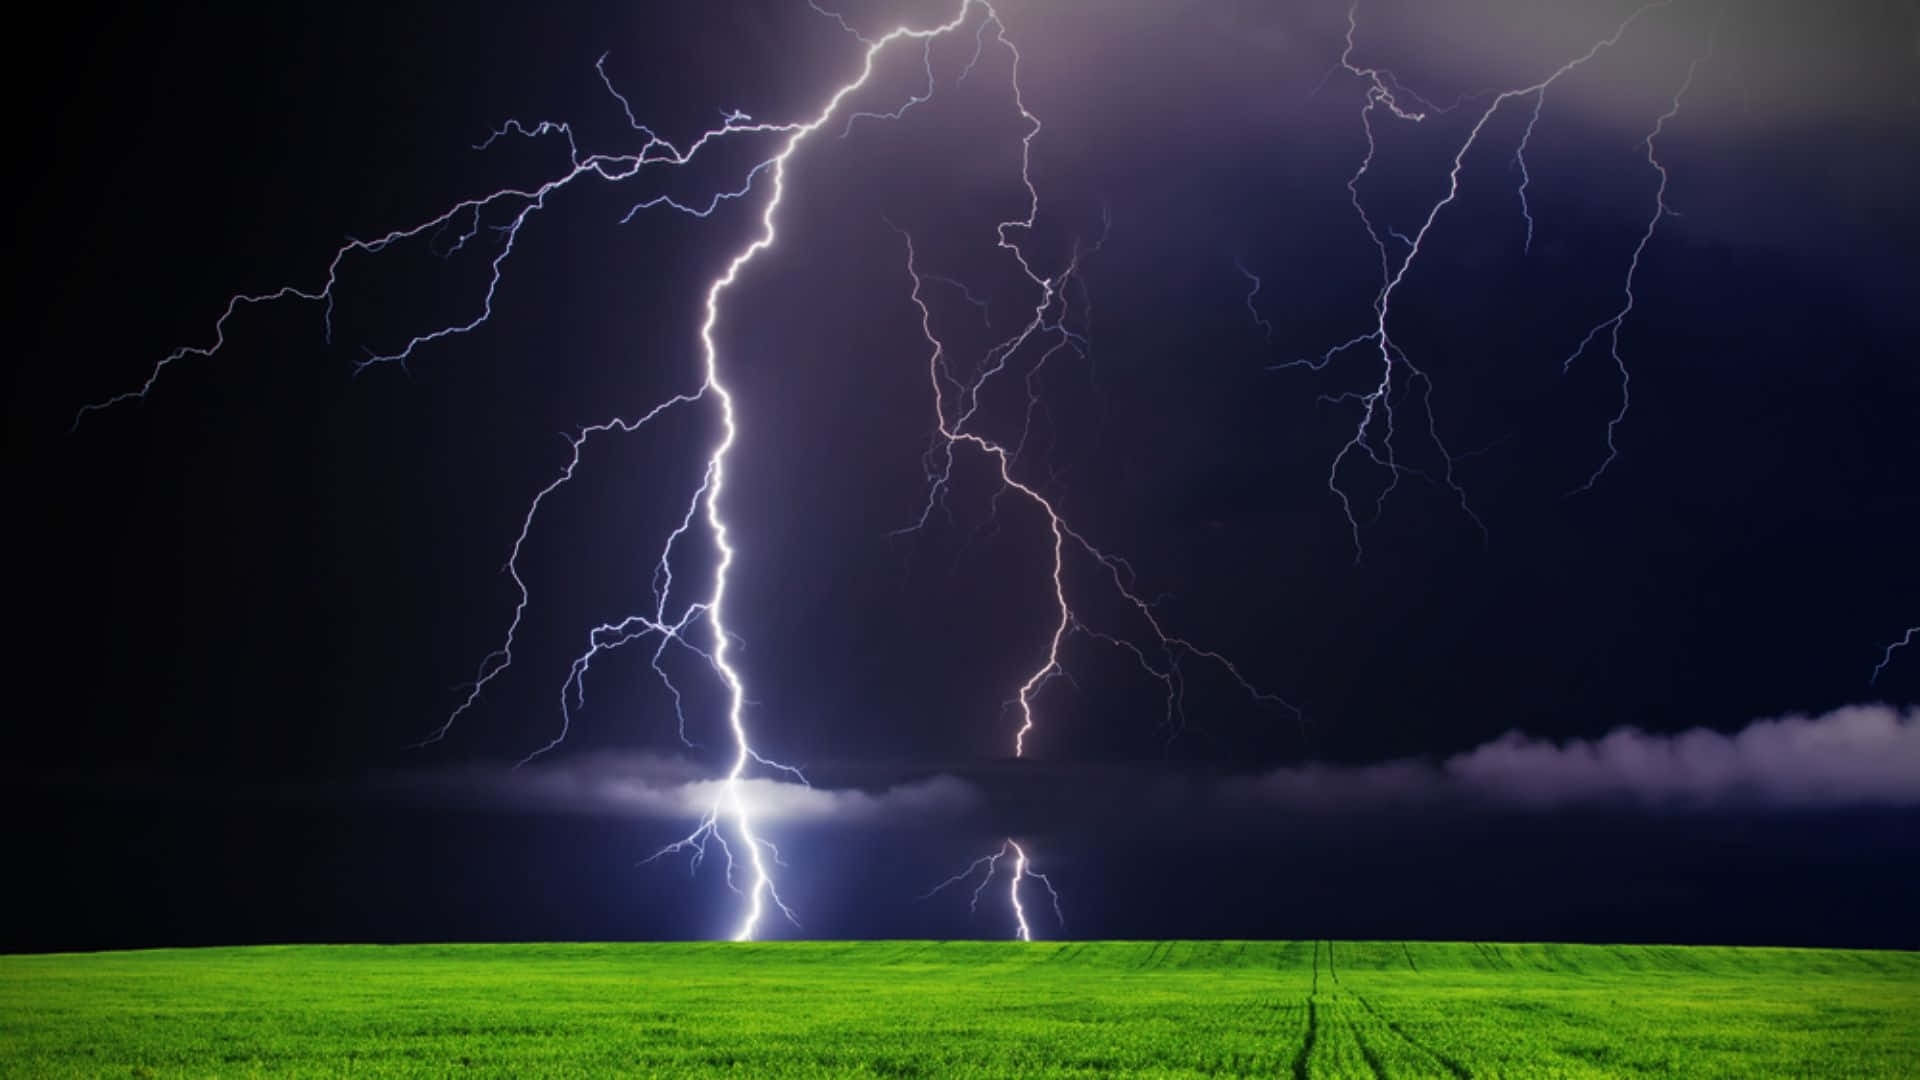 A powerful lightning streak over an empty field